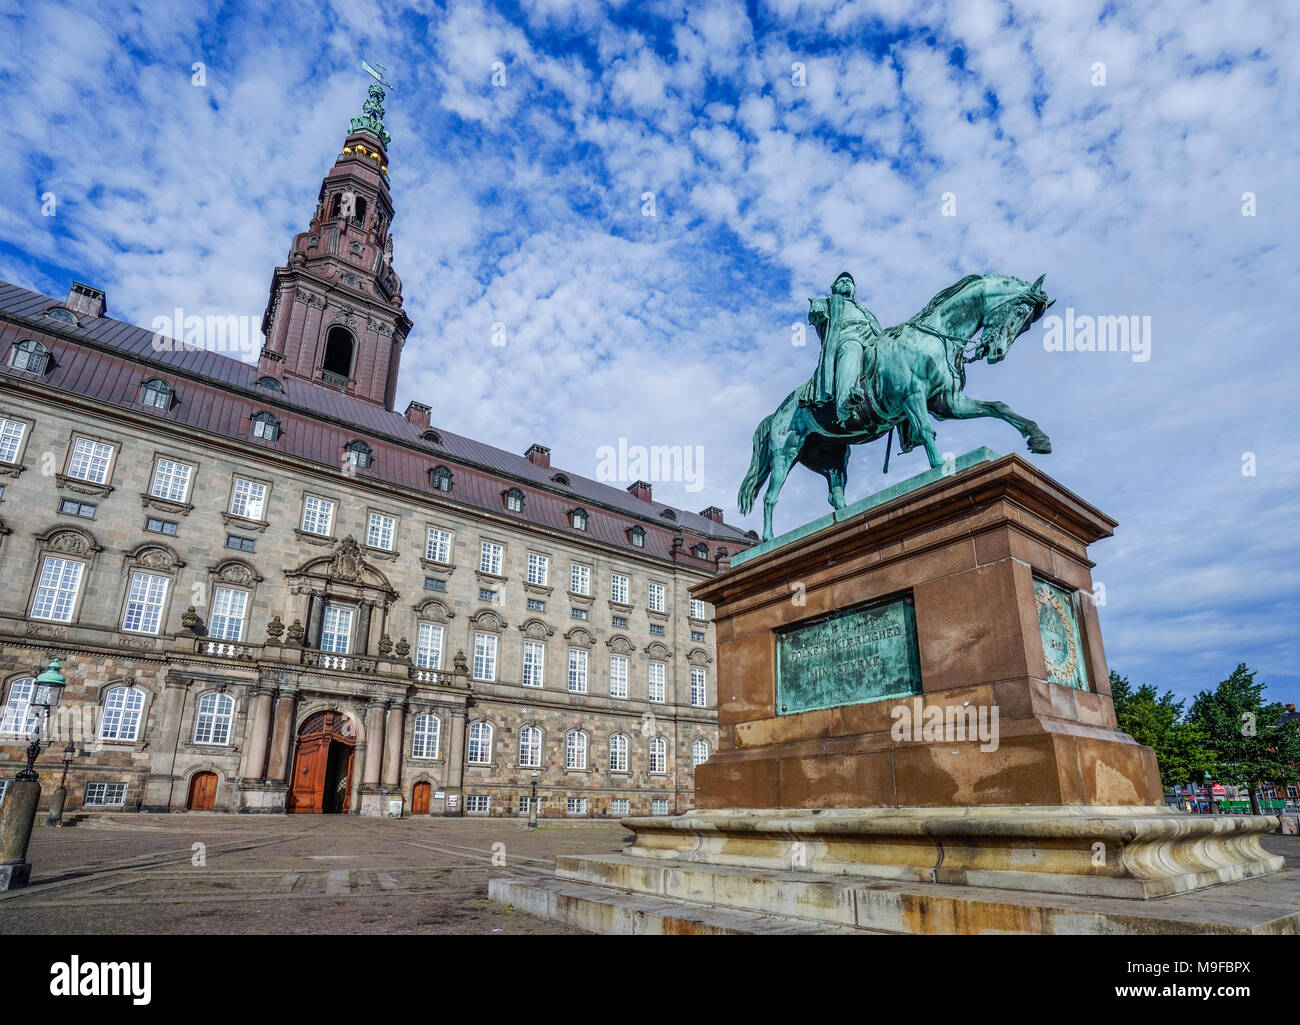 Denmark, Zealand, Copenhagen, equestrian statue of Frederick VII at Christianborg Palace, seat of the Folketinget, the Danish Parliament Stock Photo